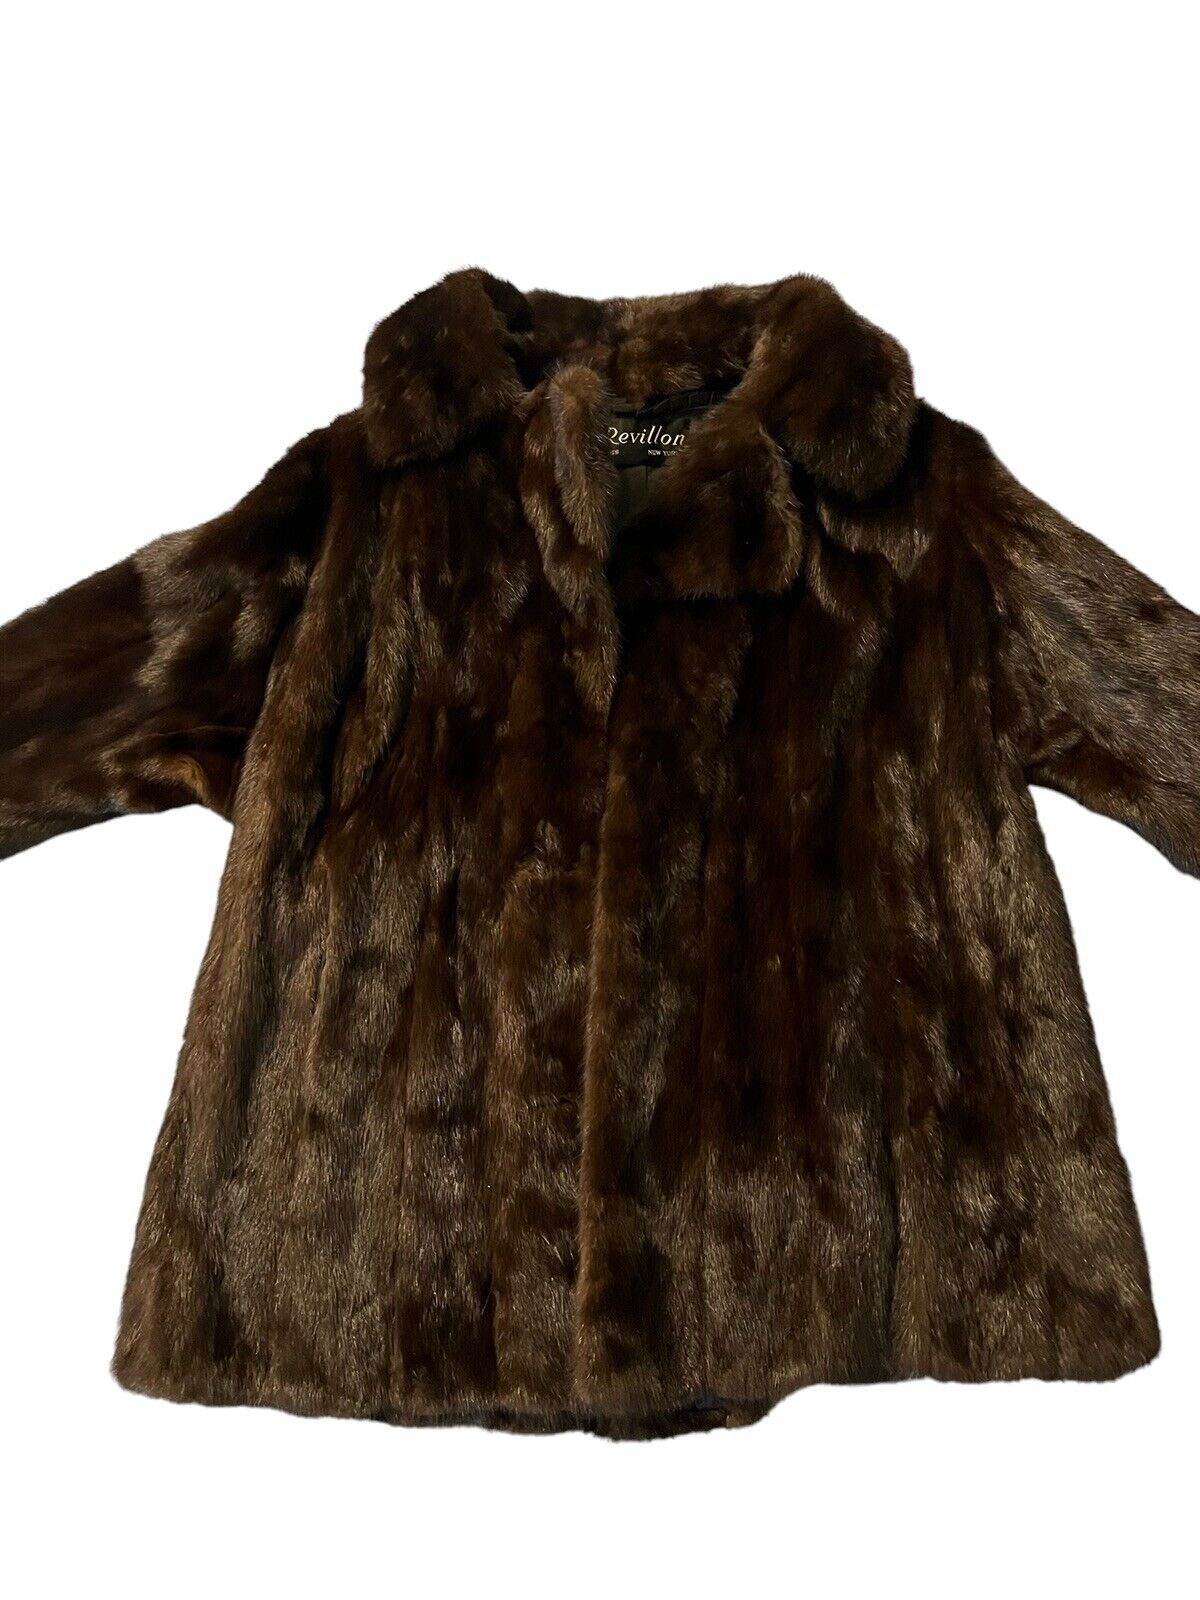 Revillon Paris London New York Black Mid Length Mink Fur Coat Saks Fifth Avenue